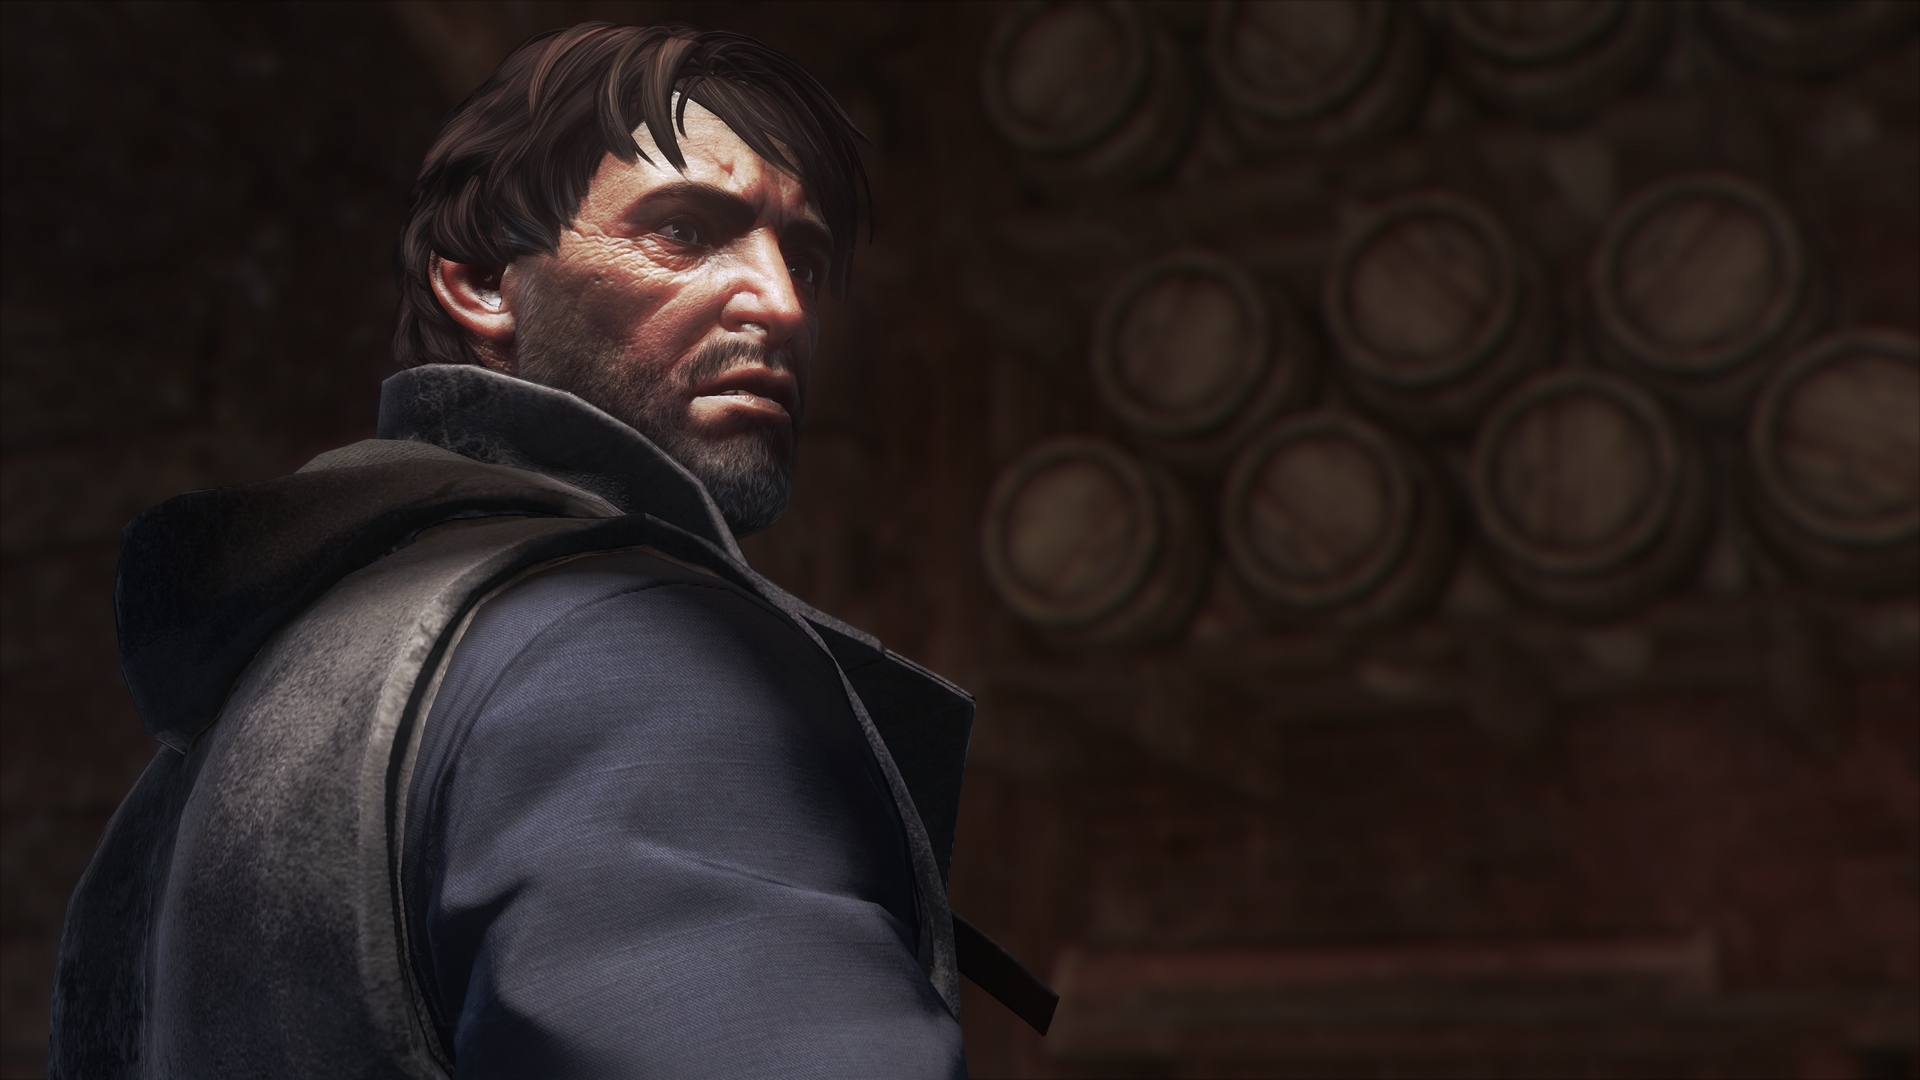 Watch new Dishonored 2 gameplay in latest Gamescom trailer